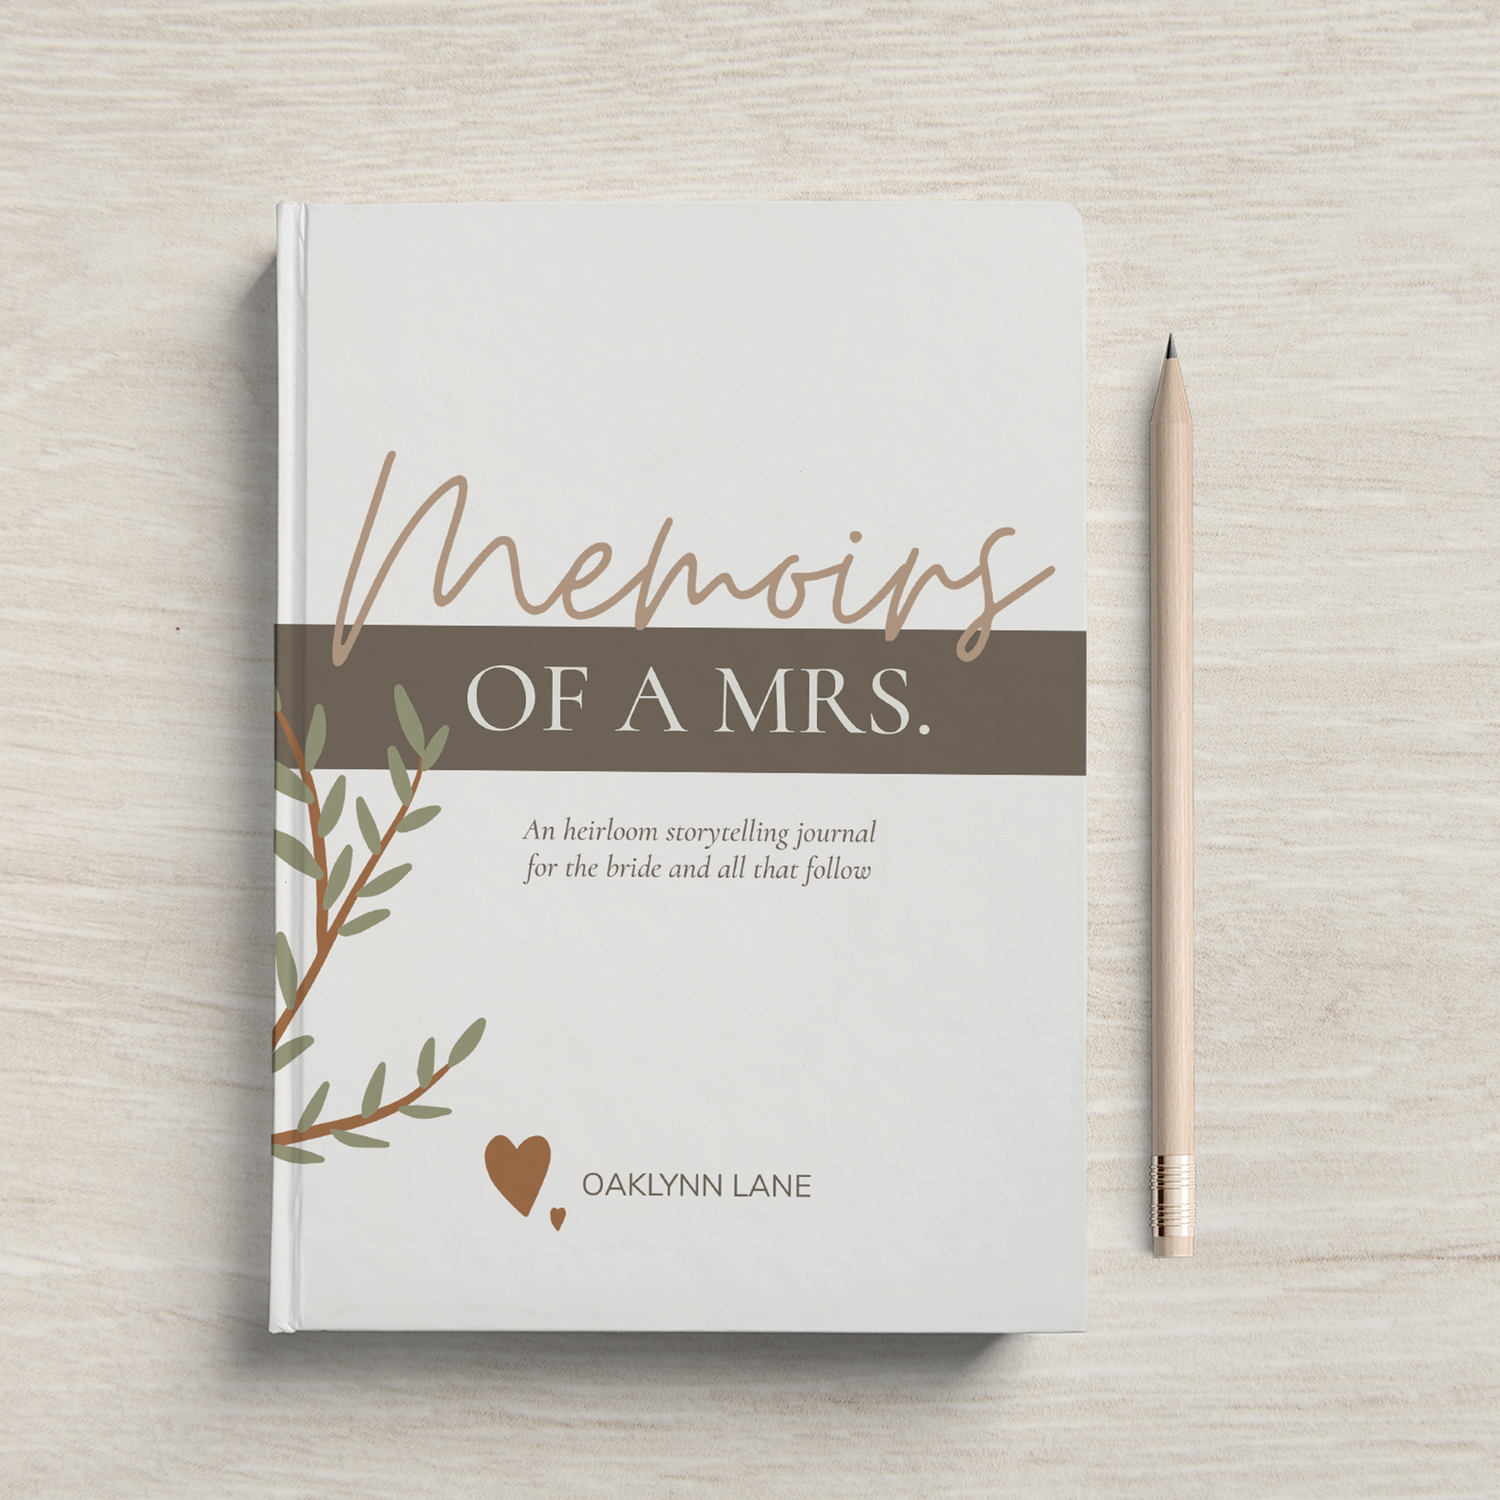 Memoirs of a Mrs. Journal - Heirloom Storytelling Wedding Journal